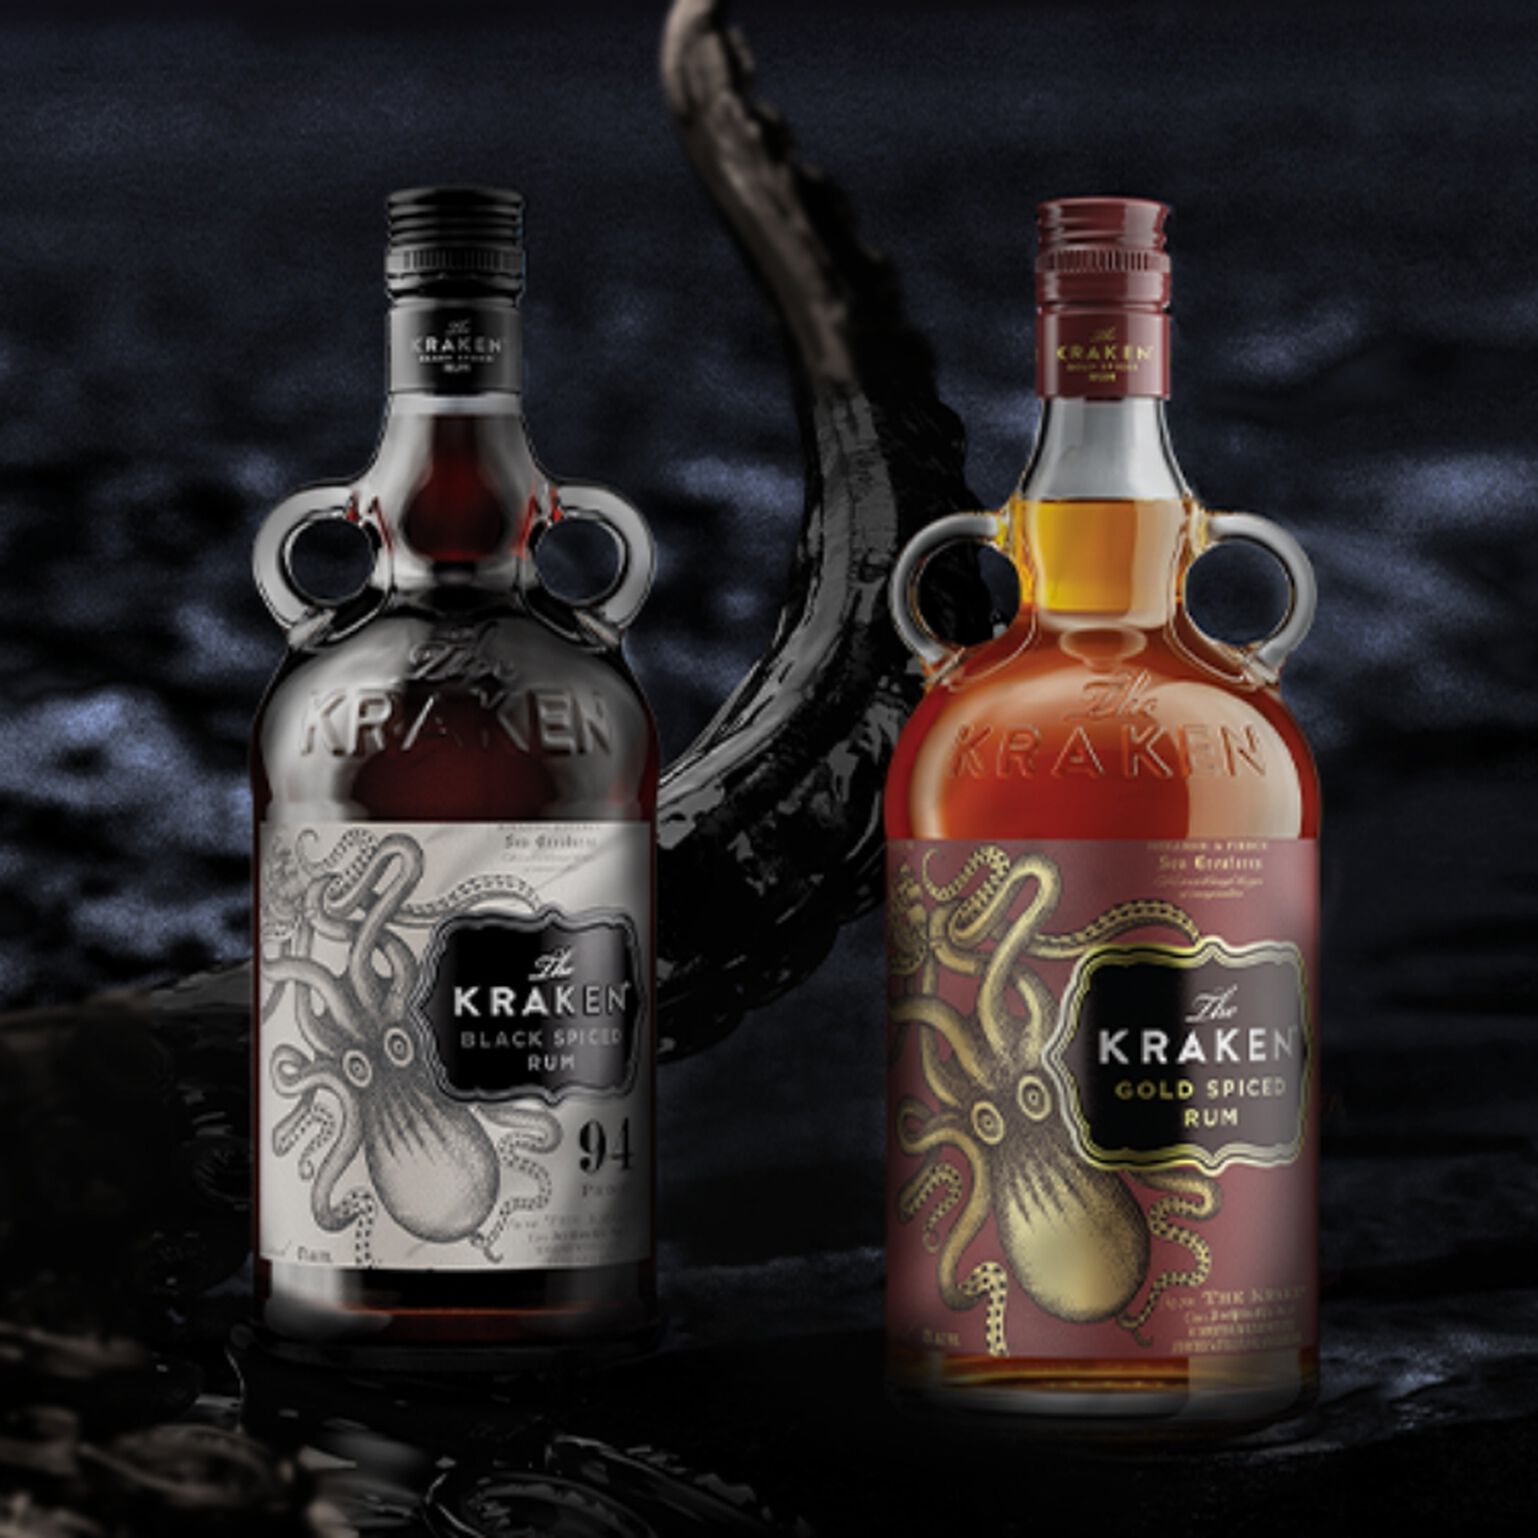 The Kraken Black Spiced Rum and The Kraken Gold Spiced Rum on a dark background